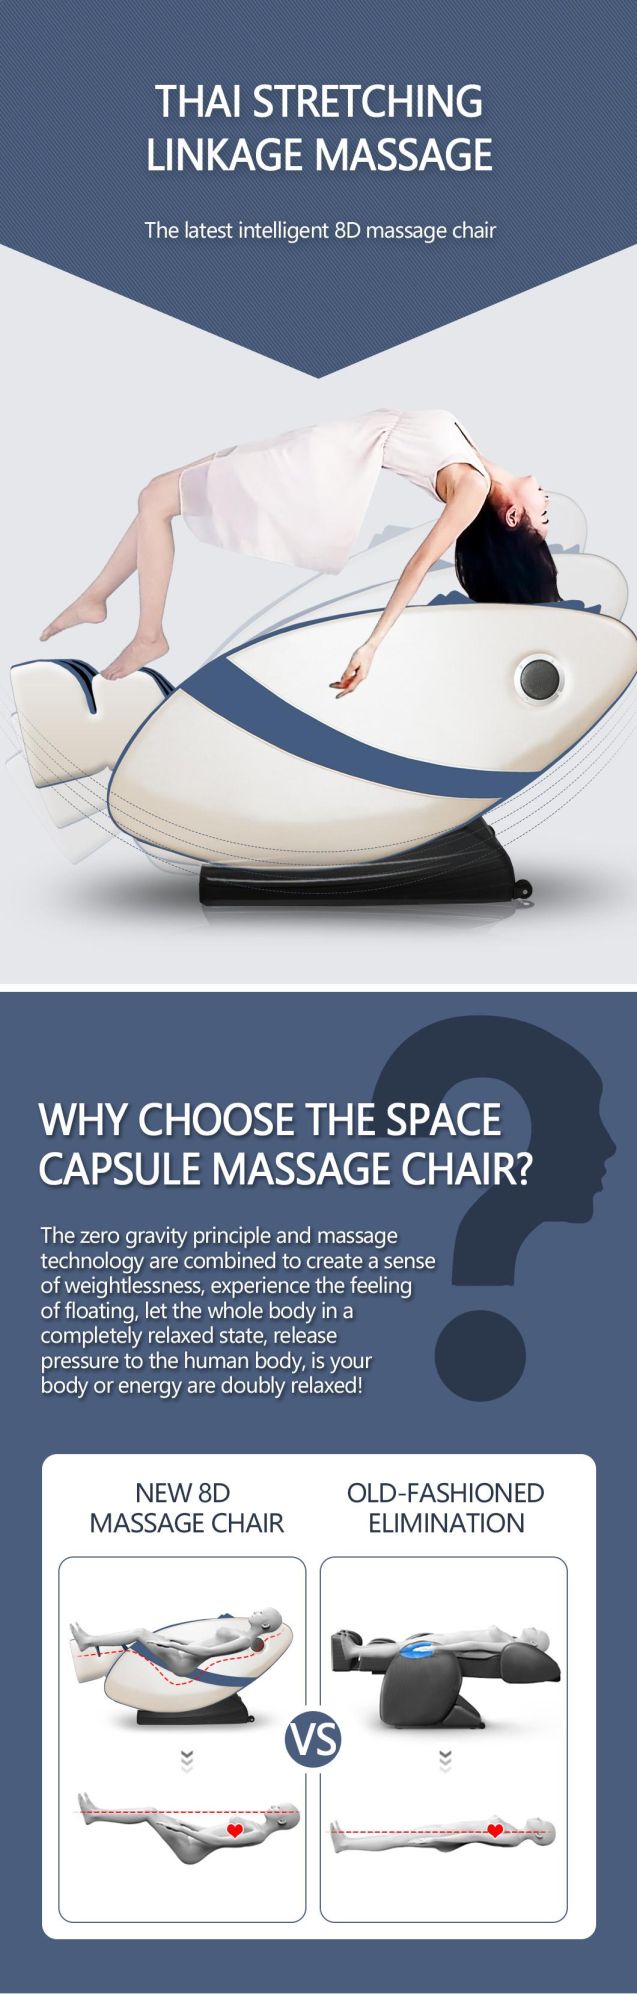 Modern Popular Massage Chair Full Body Zero Gravity Massage Table